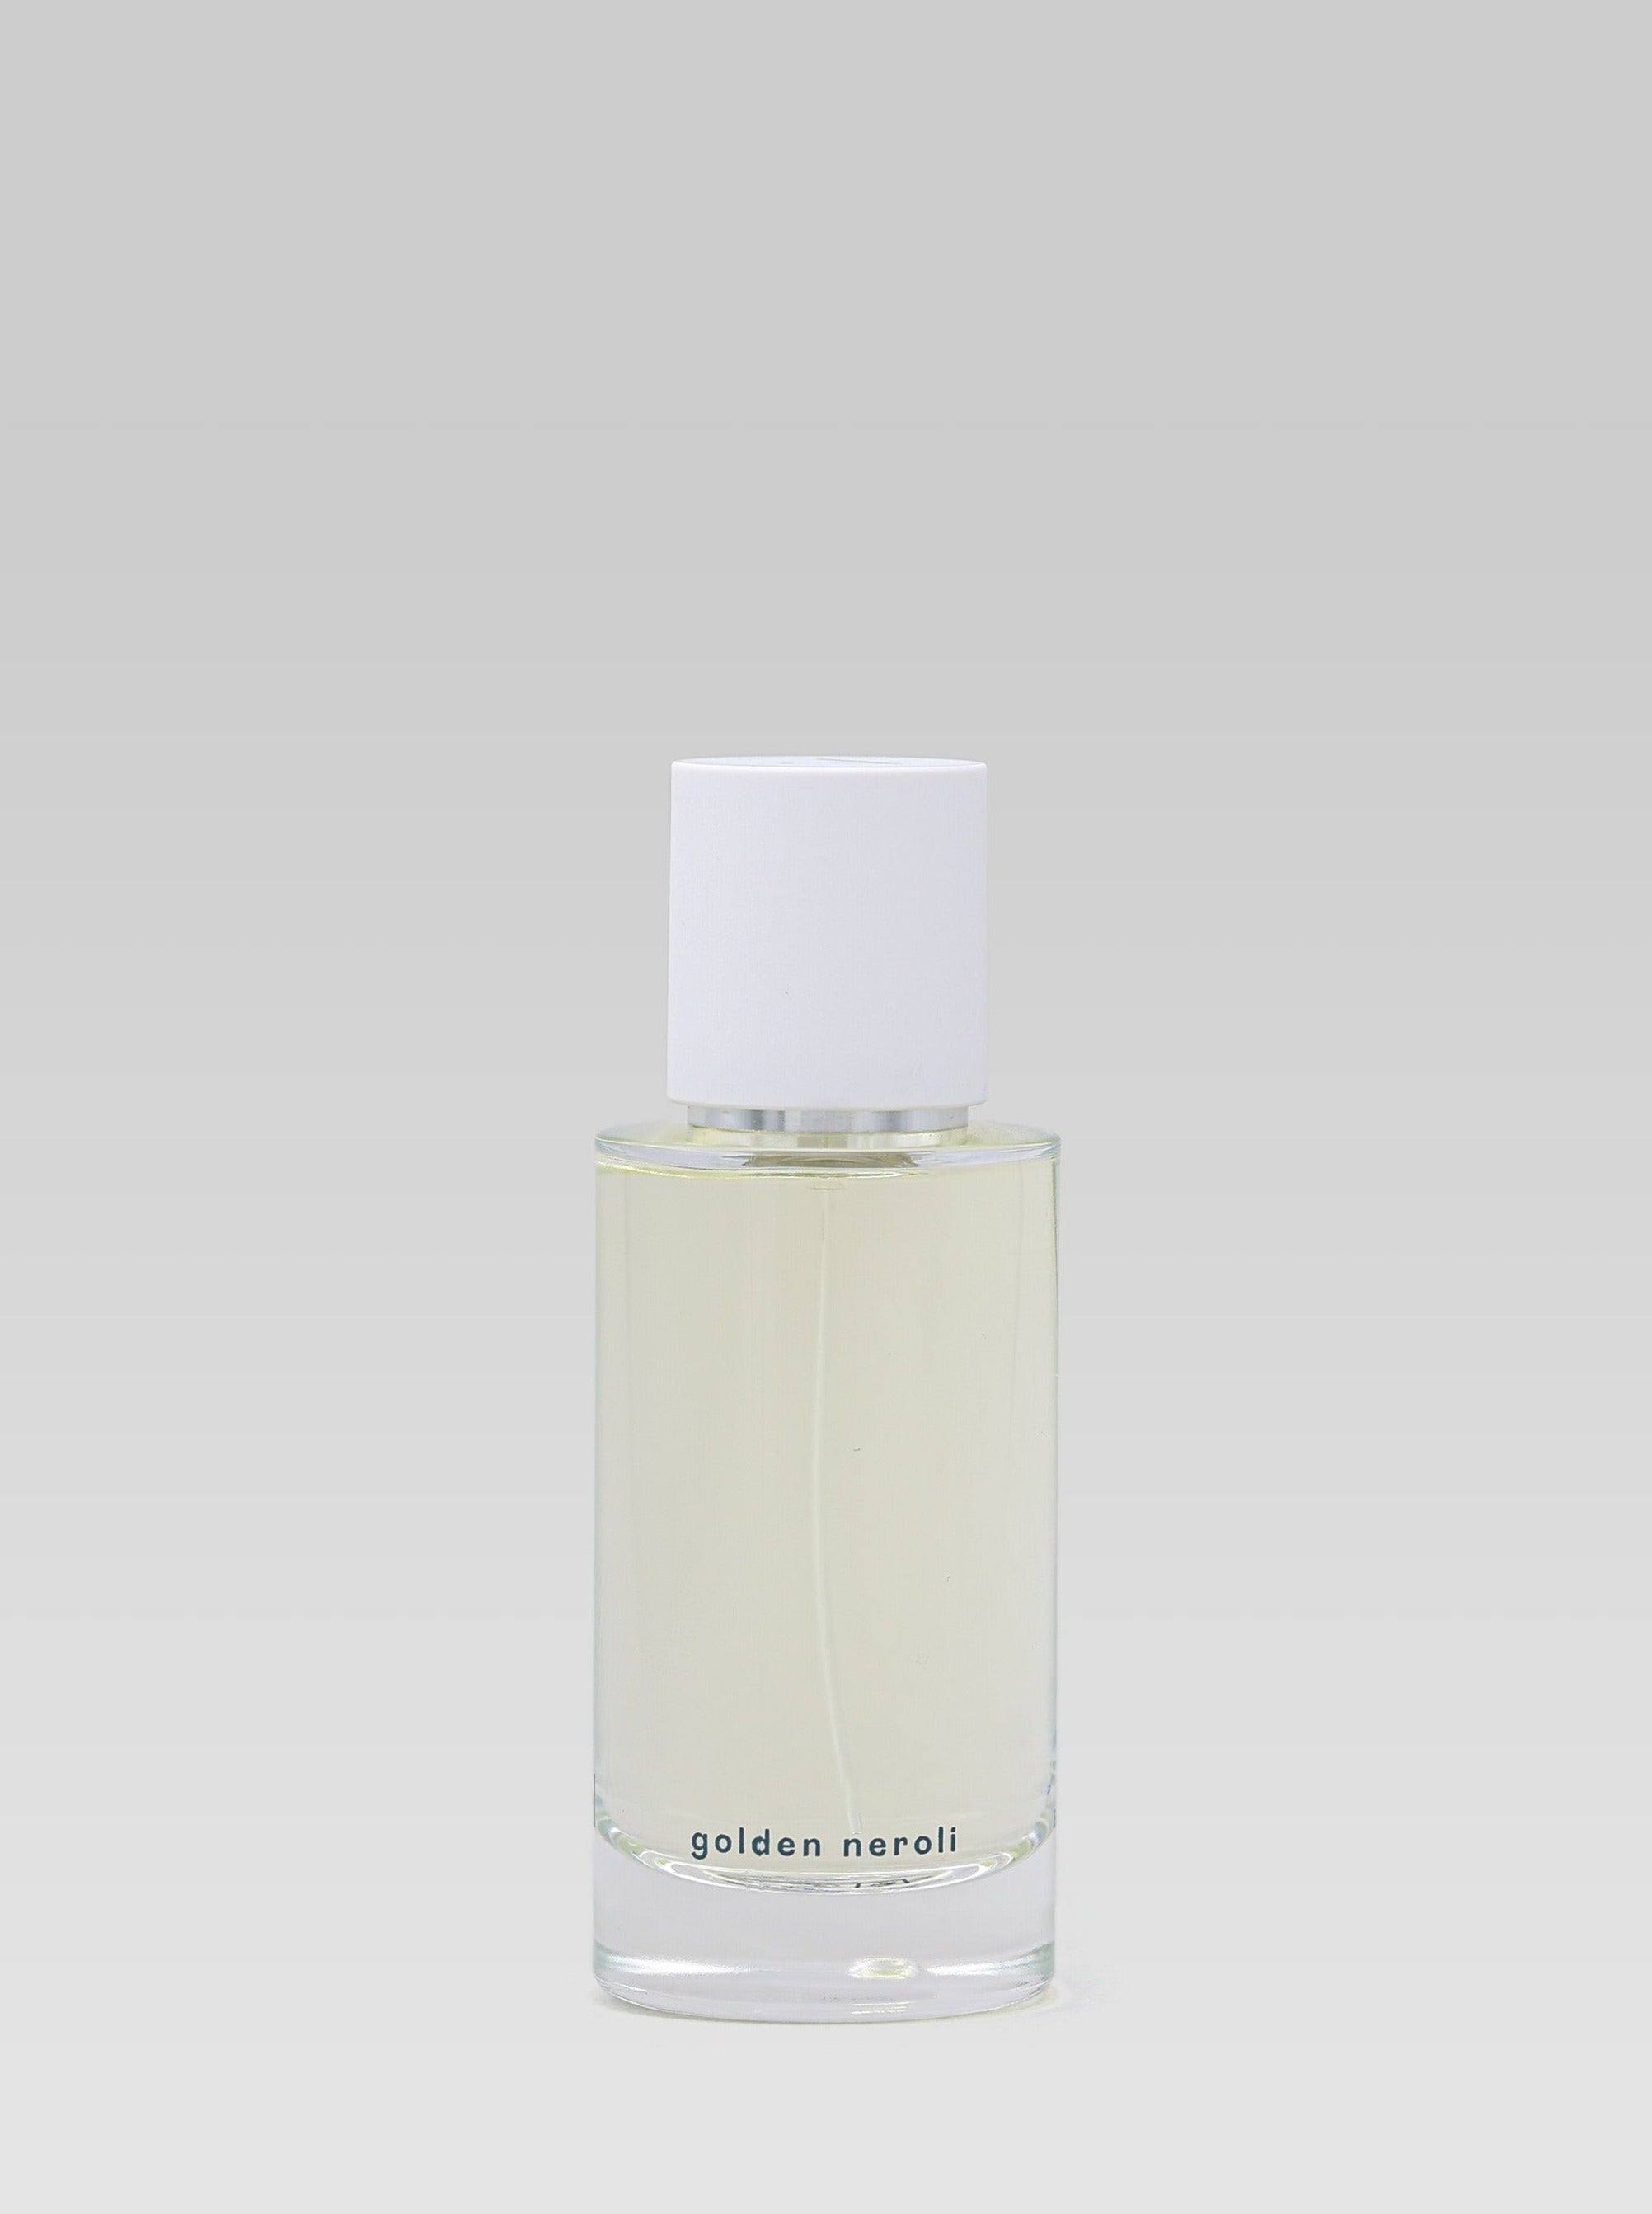 Abel Odor Golden Neroli Parfume product shot